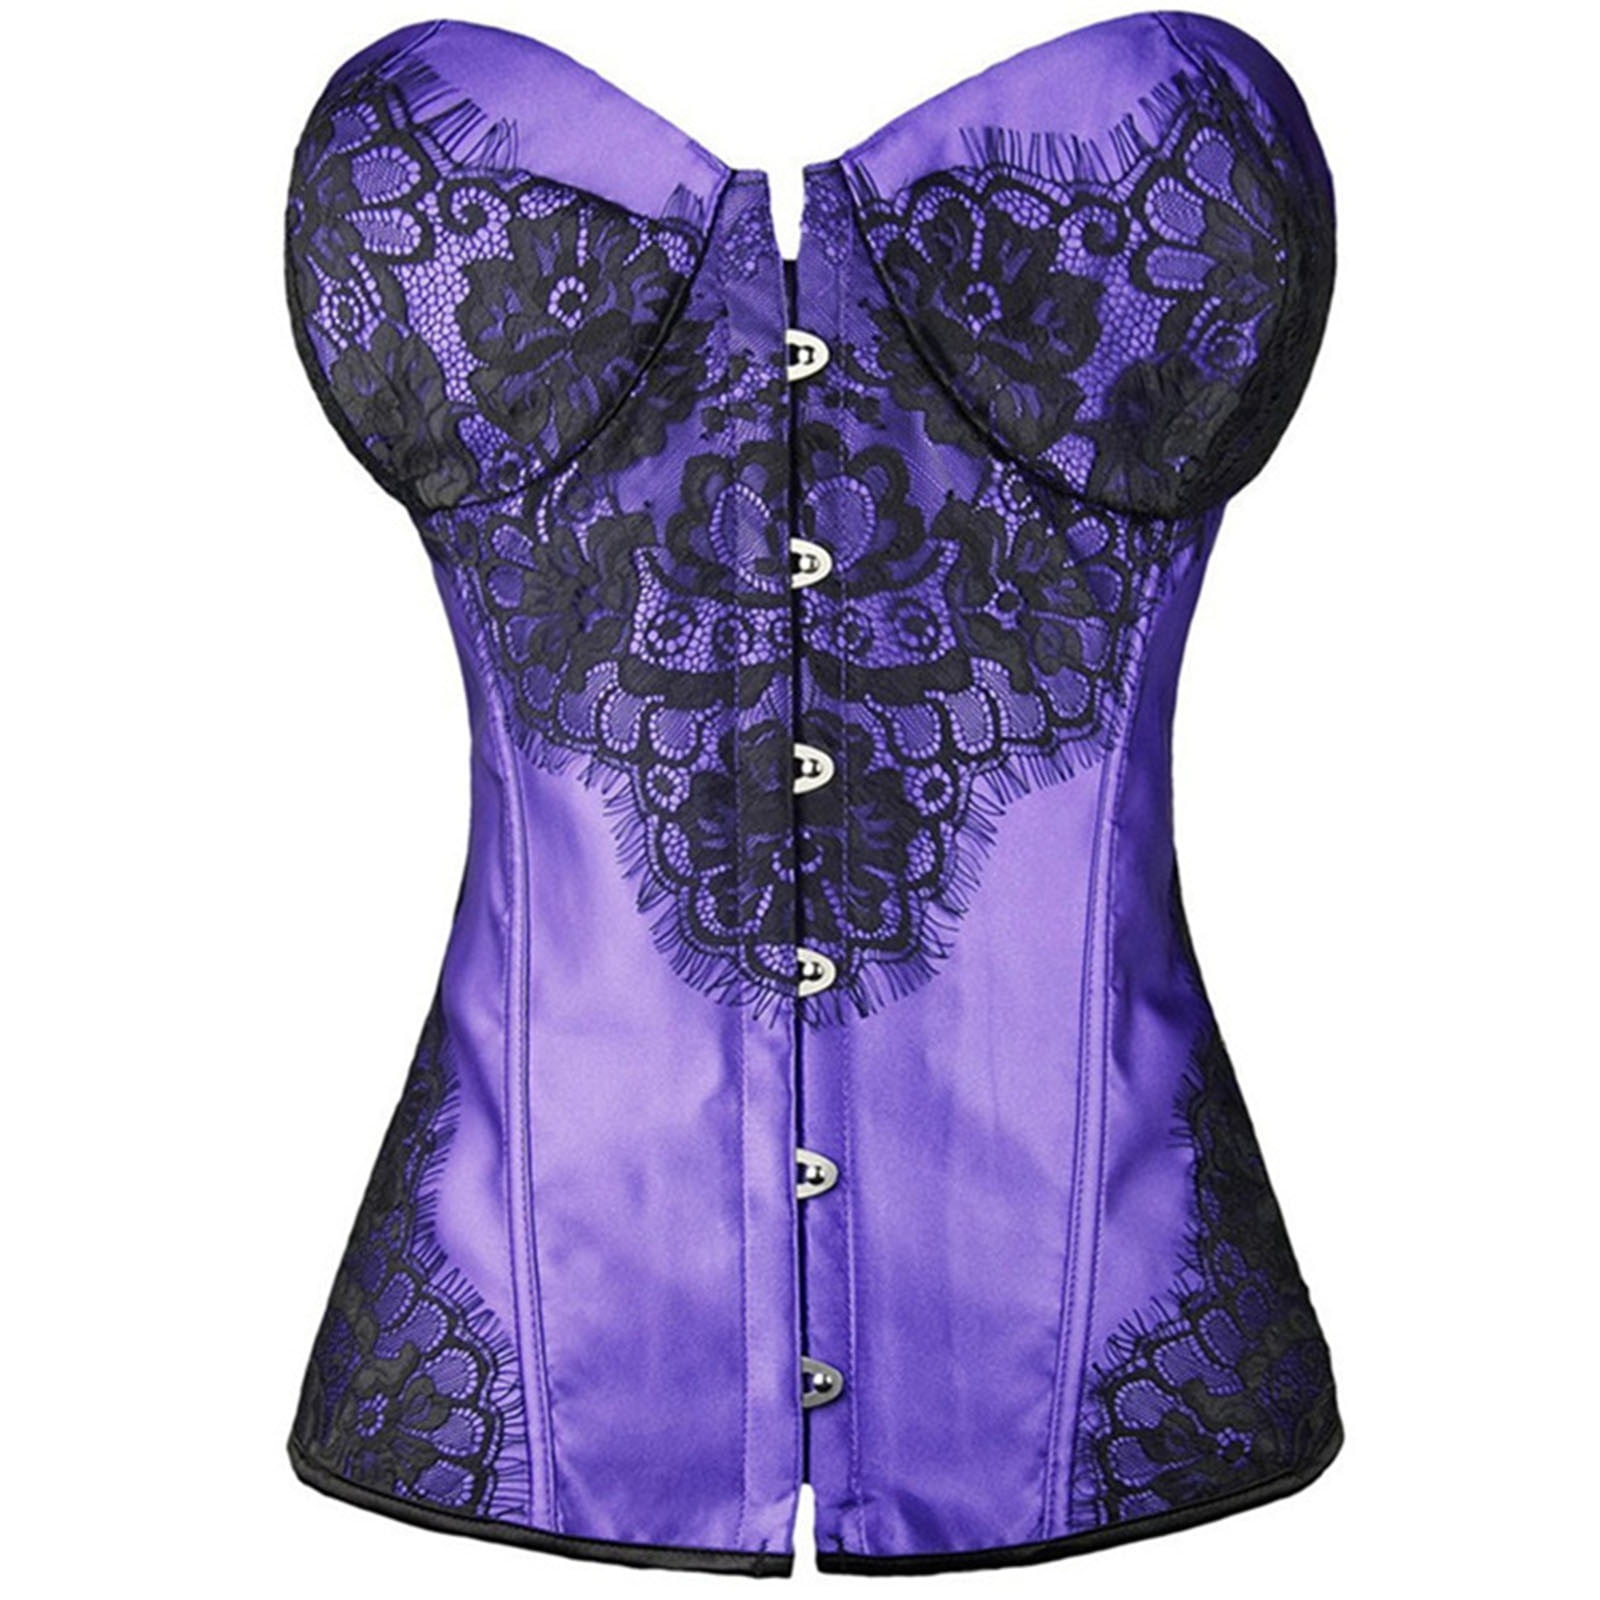 Elegant Overbust Plus Size Corset In Purple Satin & Black Lace Overlay -  Burleska - Dark Fashion Clothing